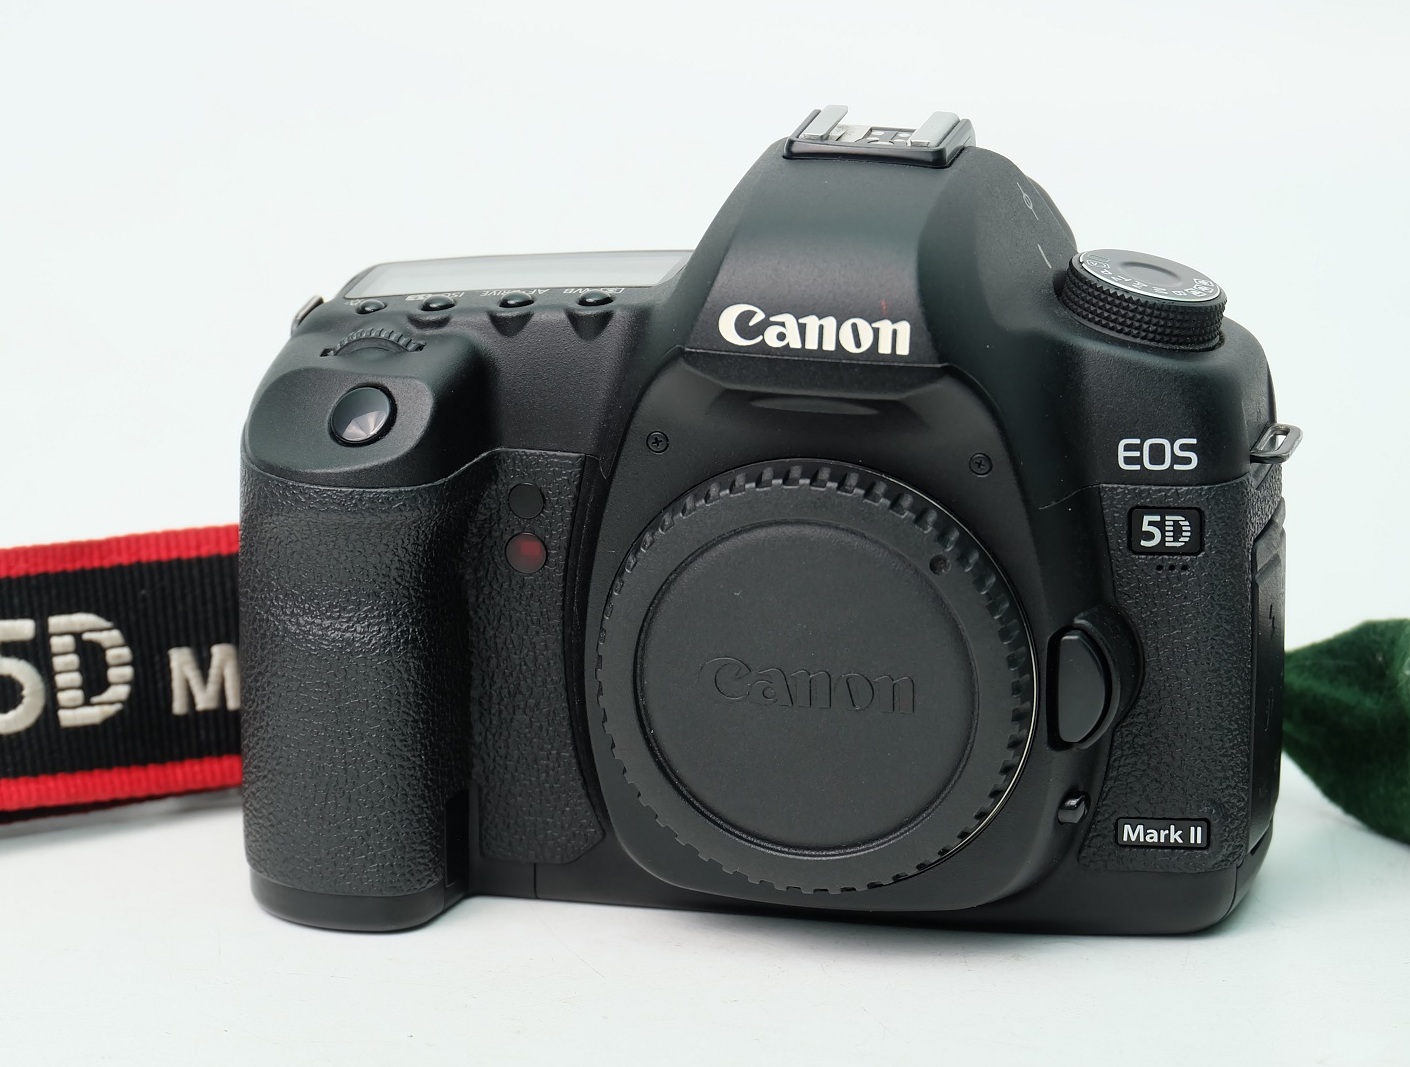 Jual Canon EOS 5D Mark II Bekas | Jual Beli Laptop Second dan Kamera